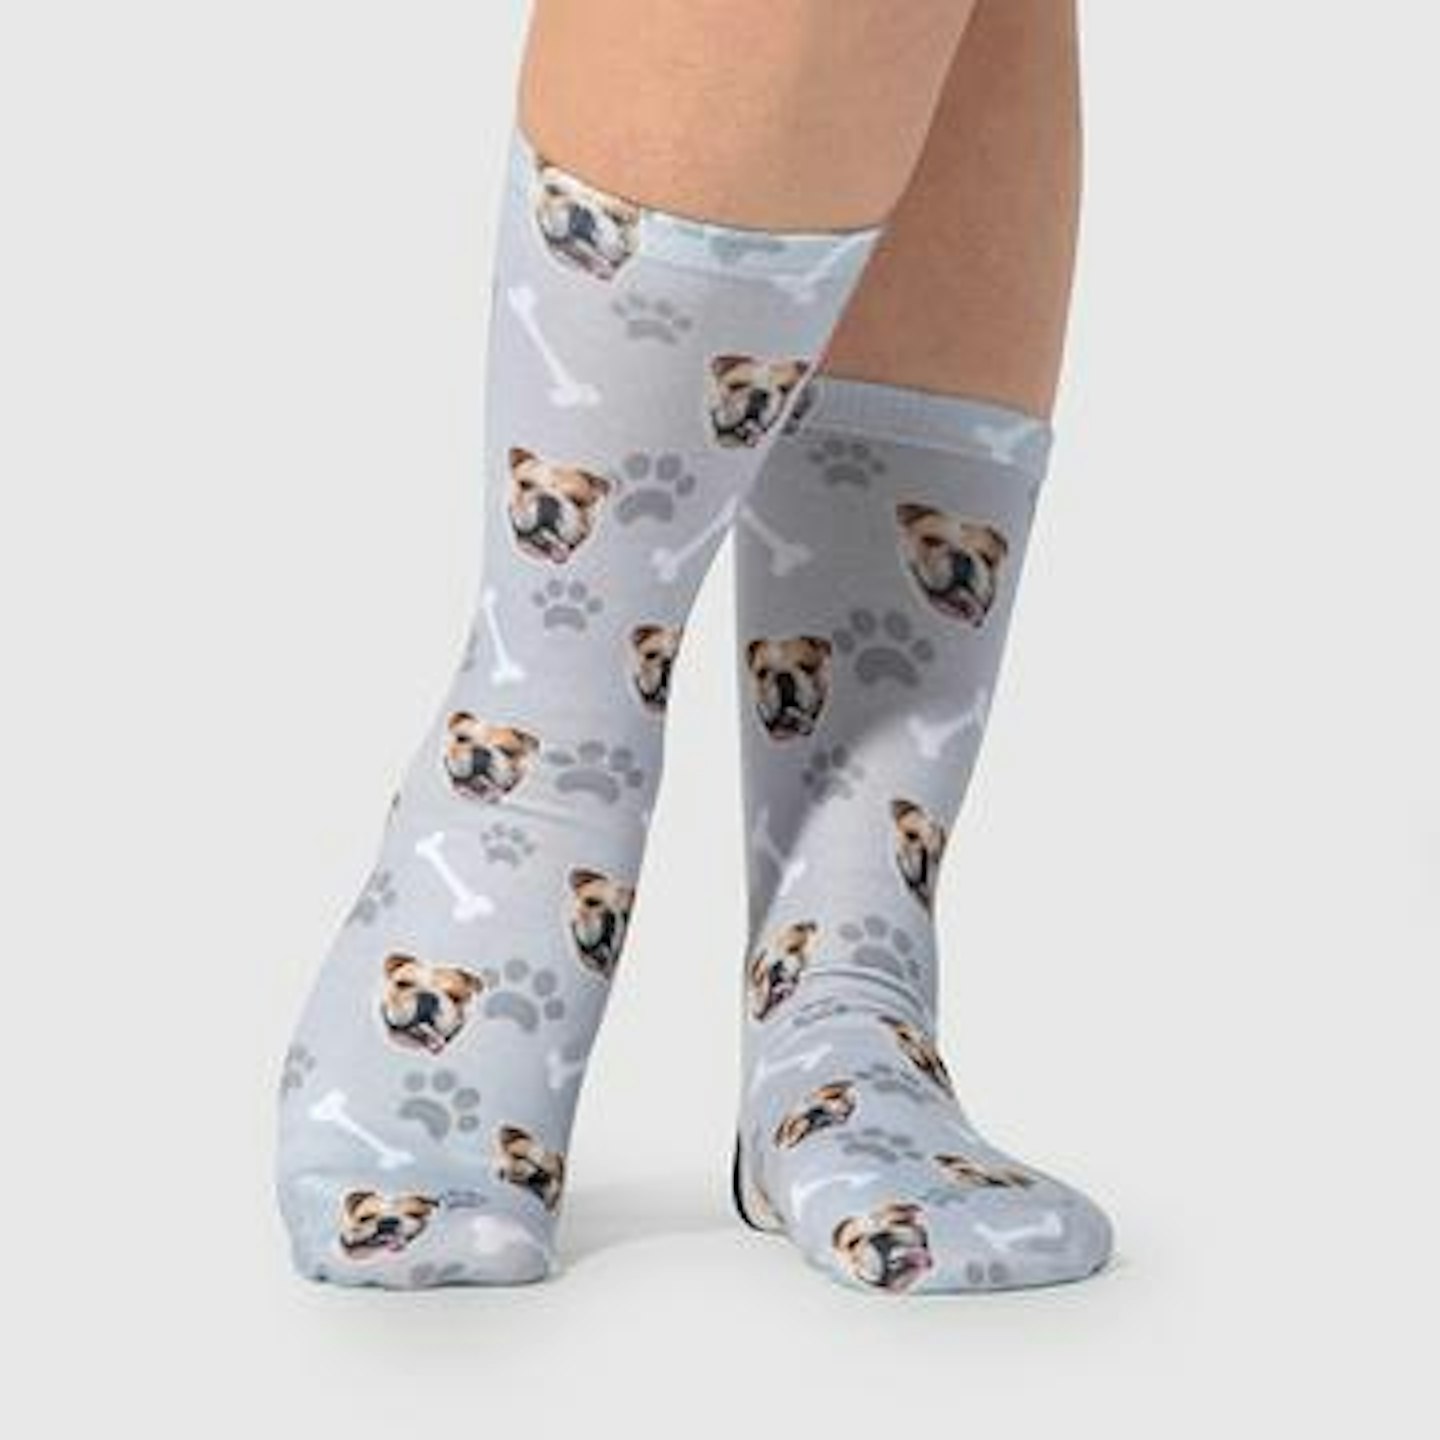 Personalised dog socks